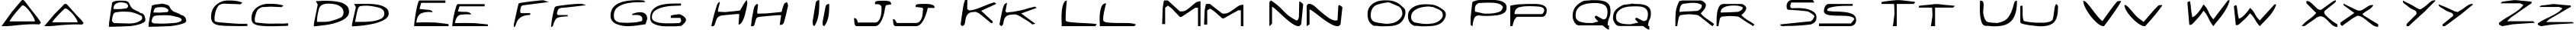 Пример написания английского алфавита шрифтом Jetta